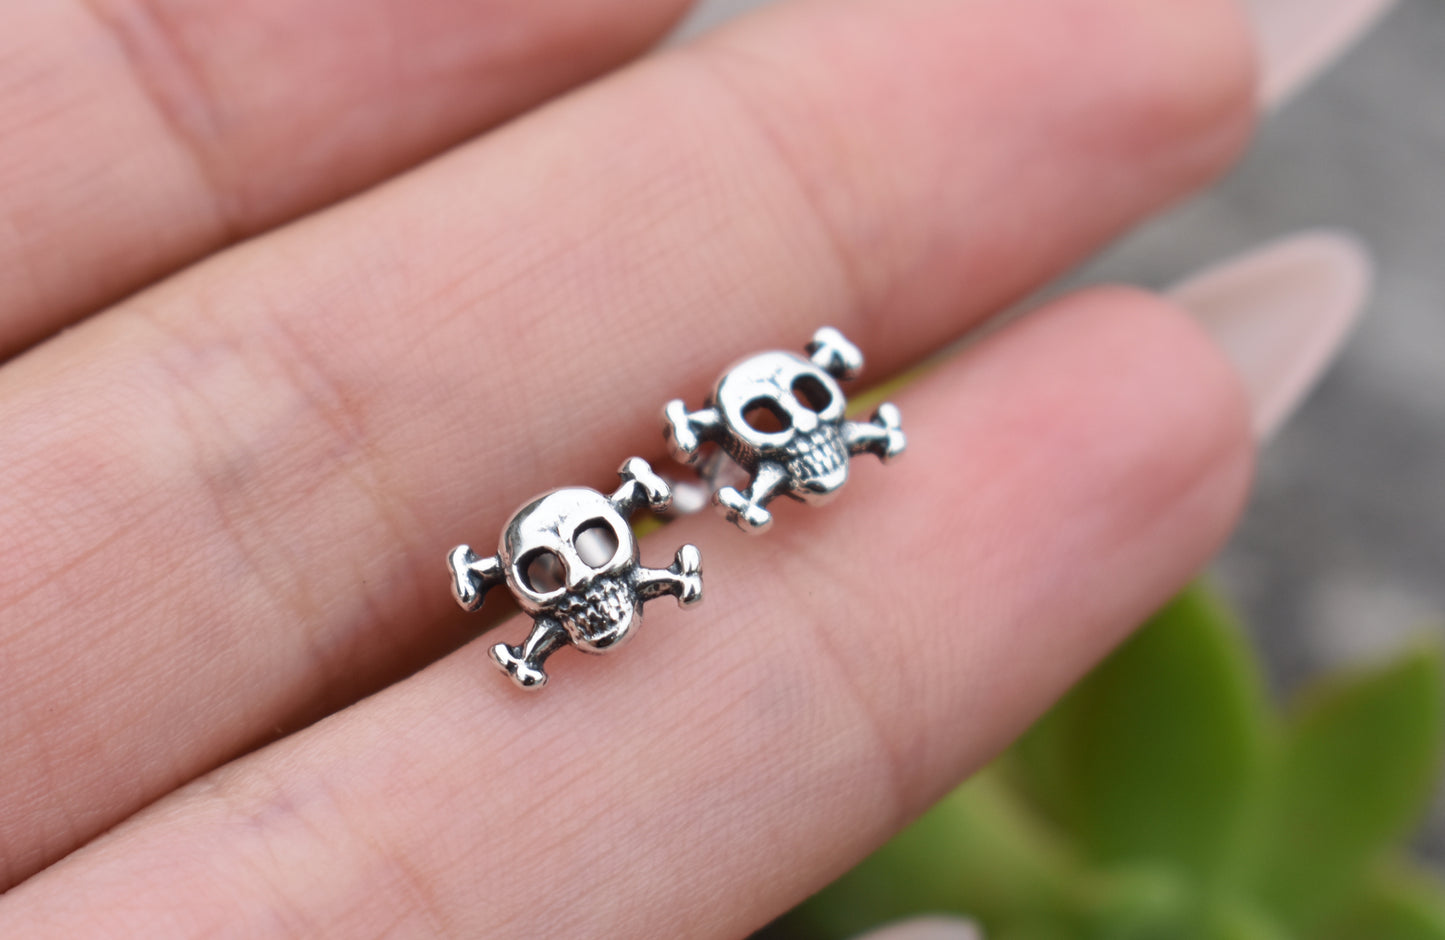 Skull Earrings- Stud Earrings, Skeleton studs, Skull Jewelry, Halloween Earrings